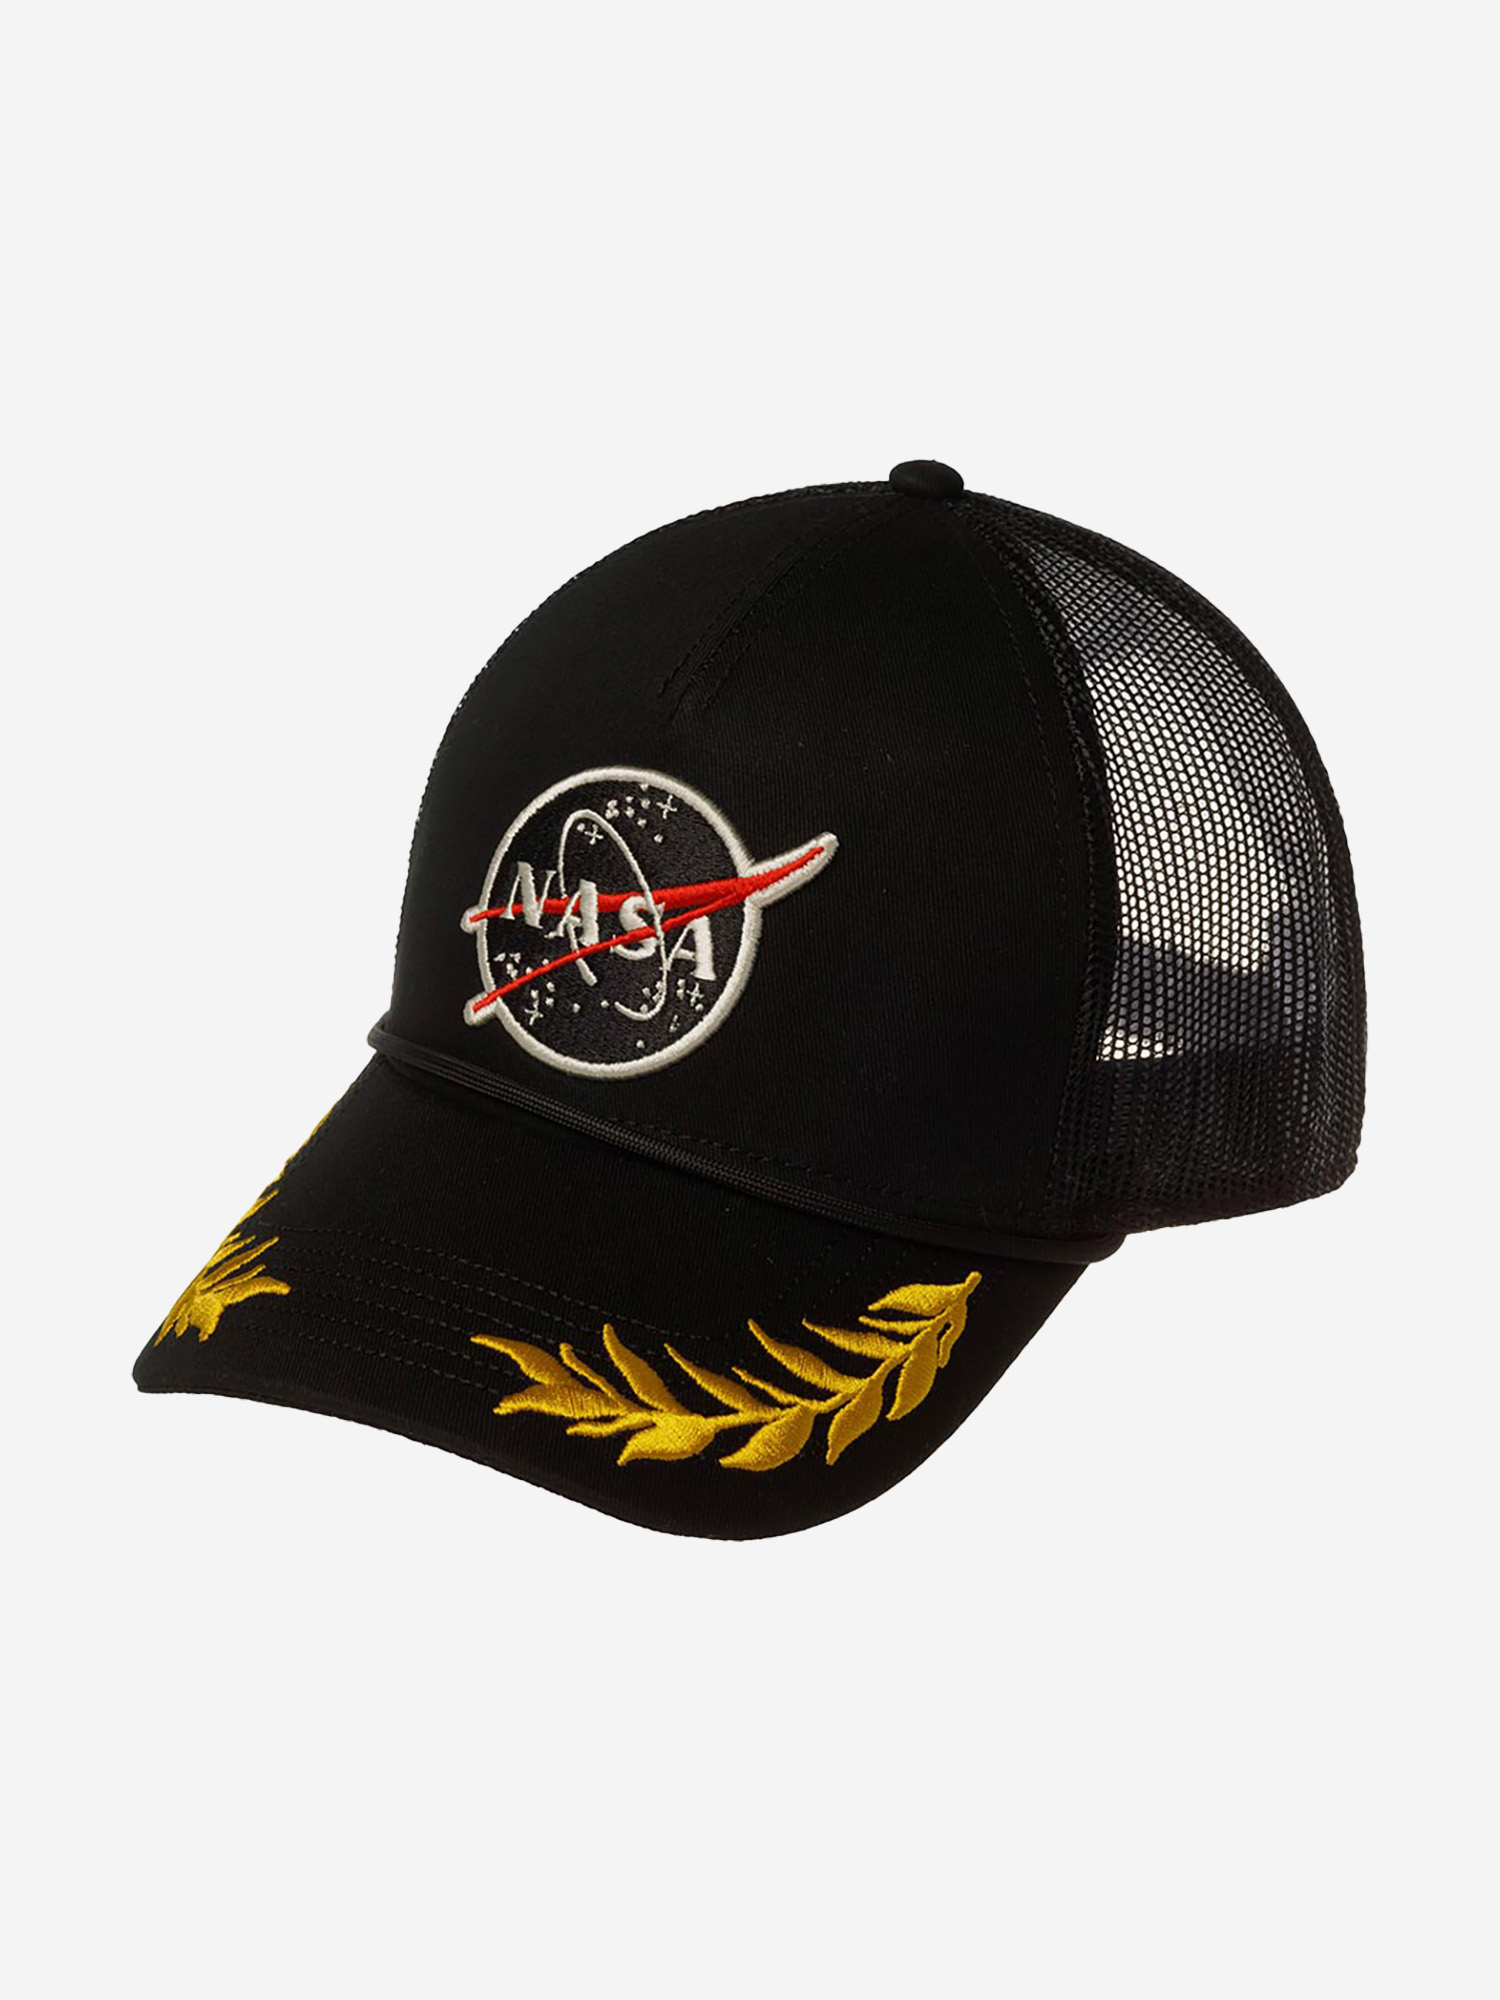 Бейсболка AMERICAN NEEDLE 45030A-NASA Space with NASA General (черный), Черный бейсболка american needle 43870a nasa space with nasa